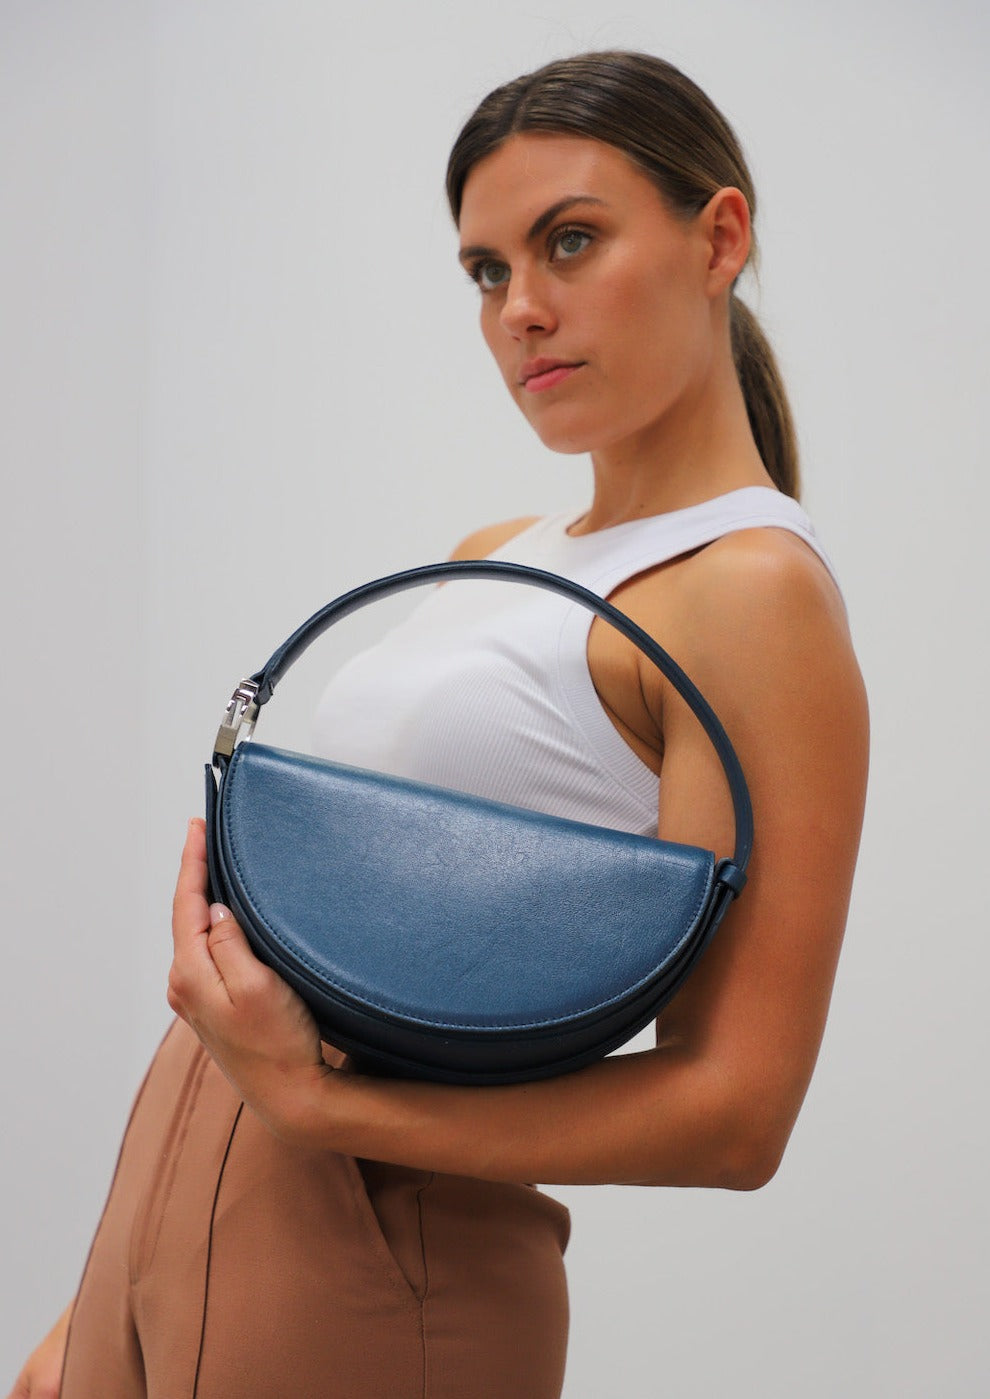 Dooz cancer zodiac sign leather handbag short strap purse dark teal blue color theory empowerment 